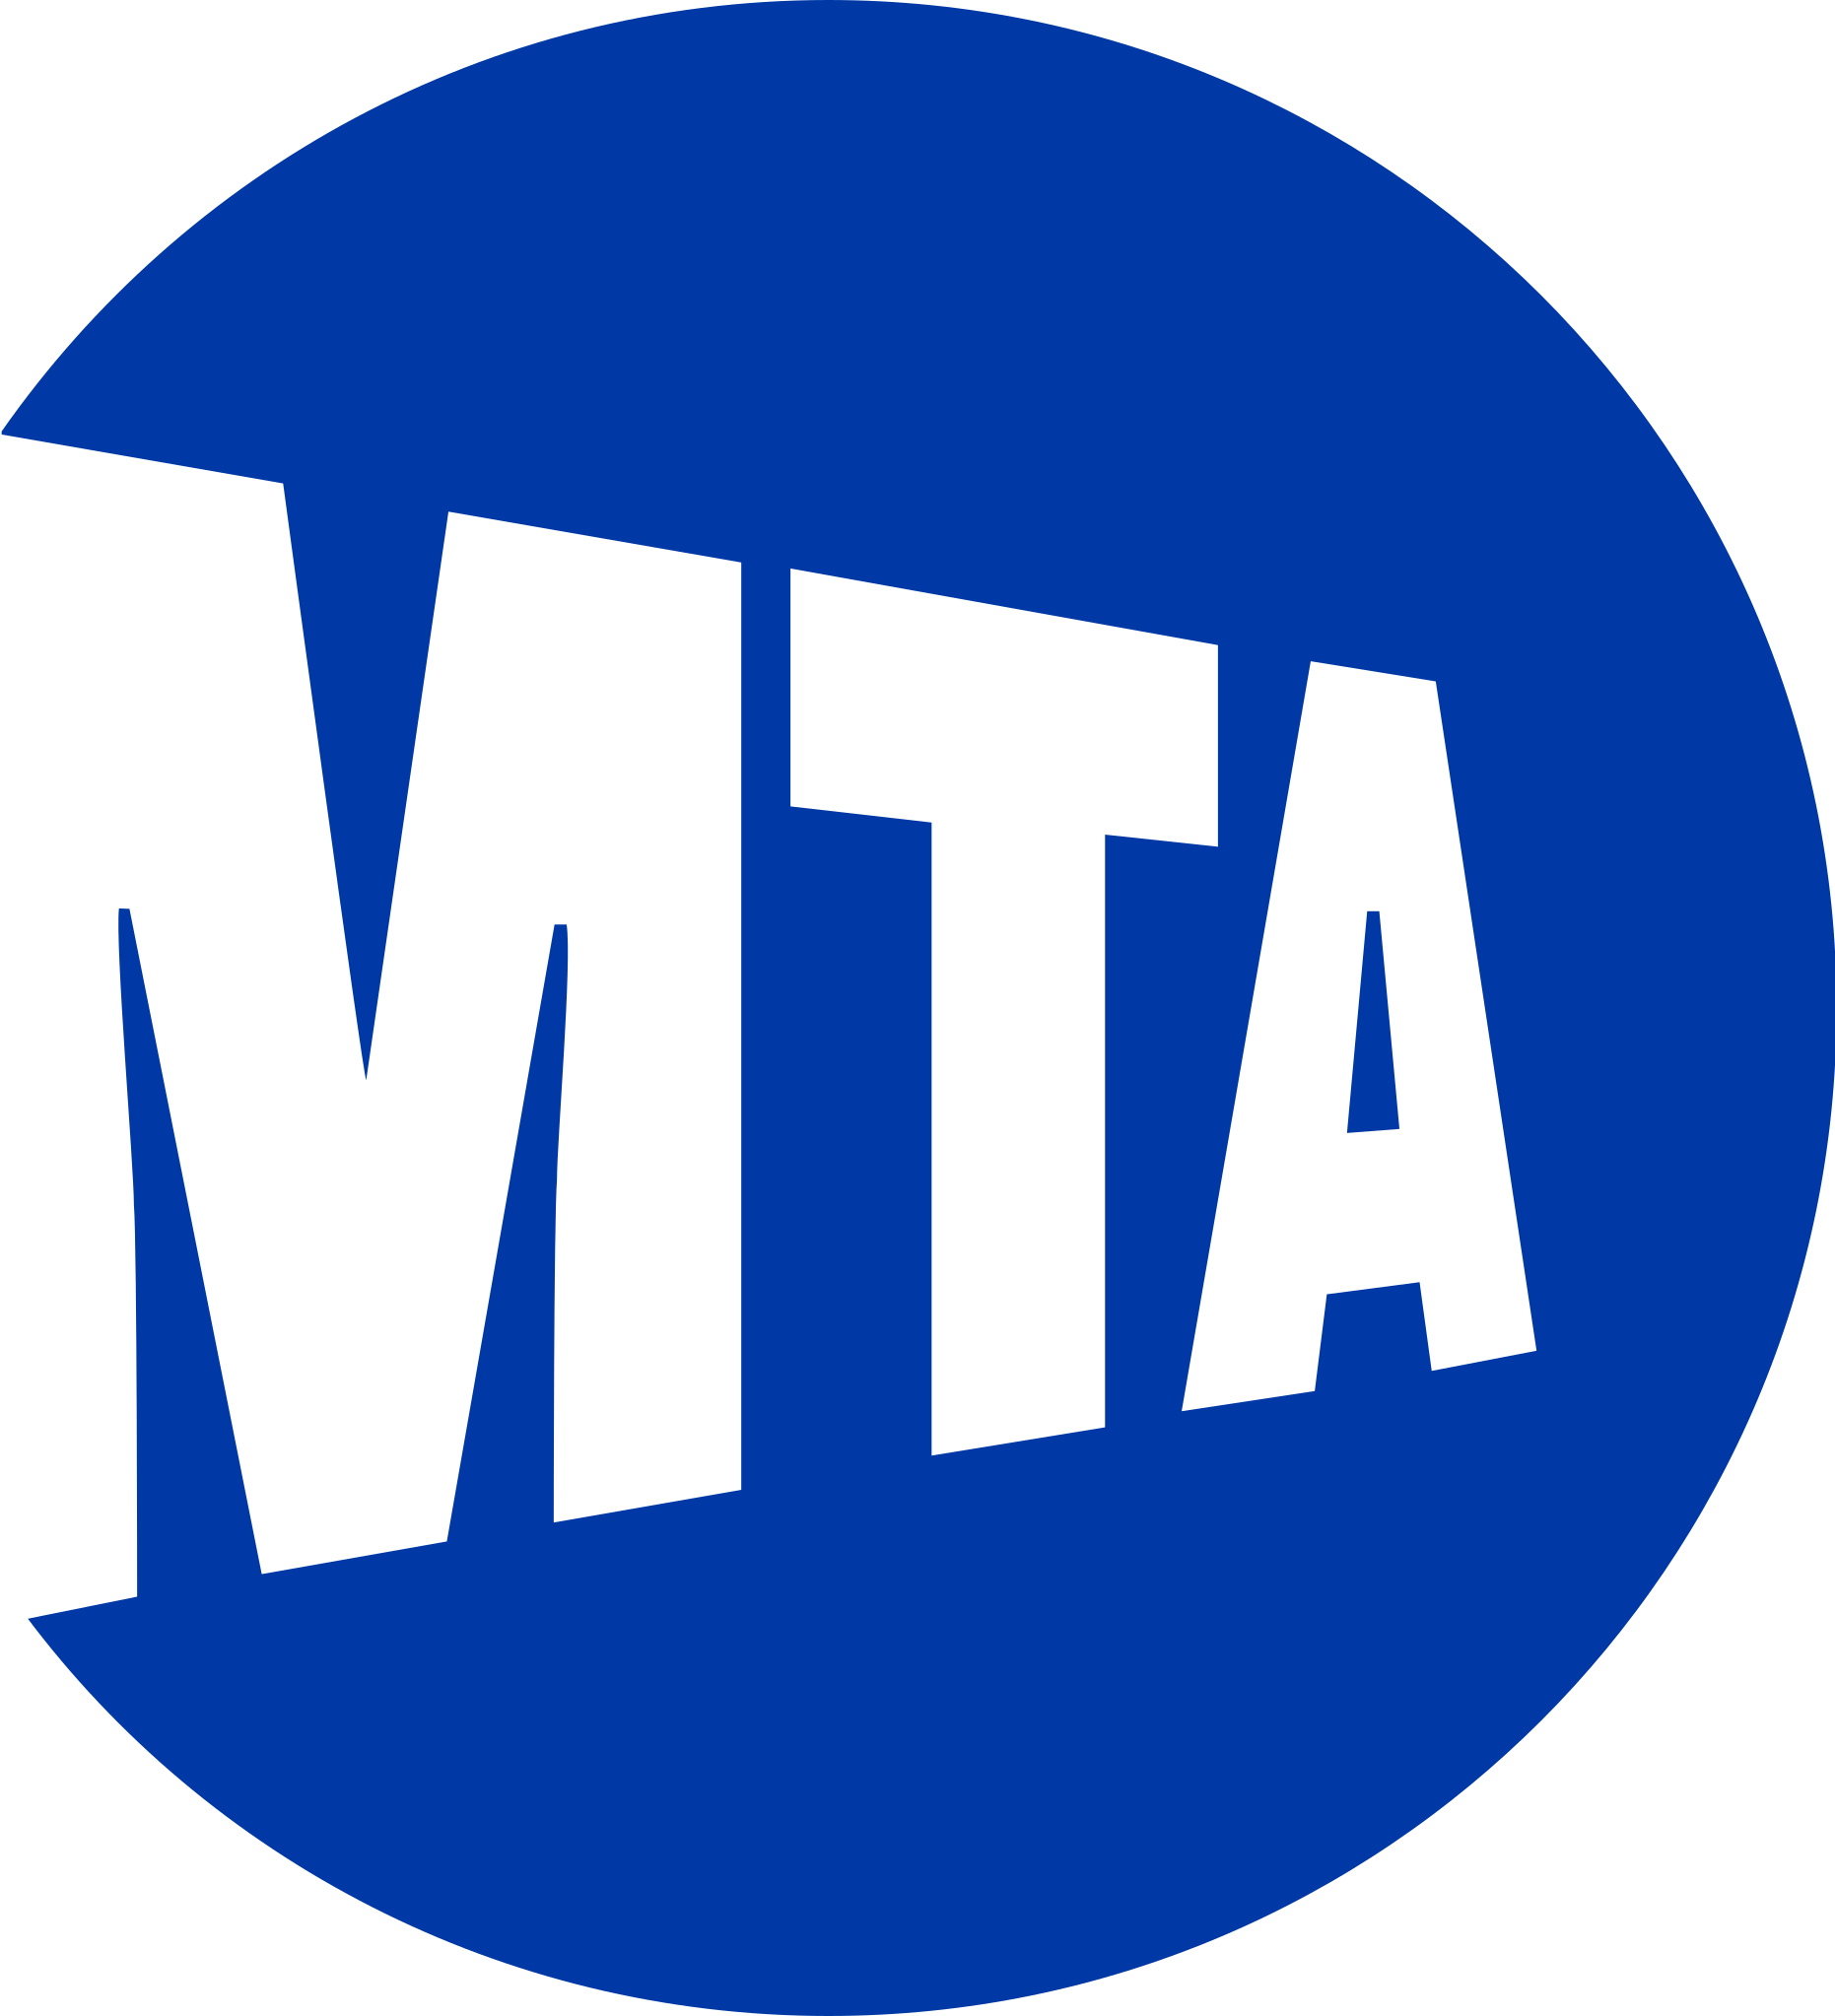 Logo of the MTA, white MTA text on blue circle